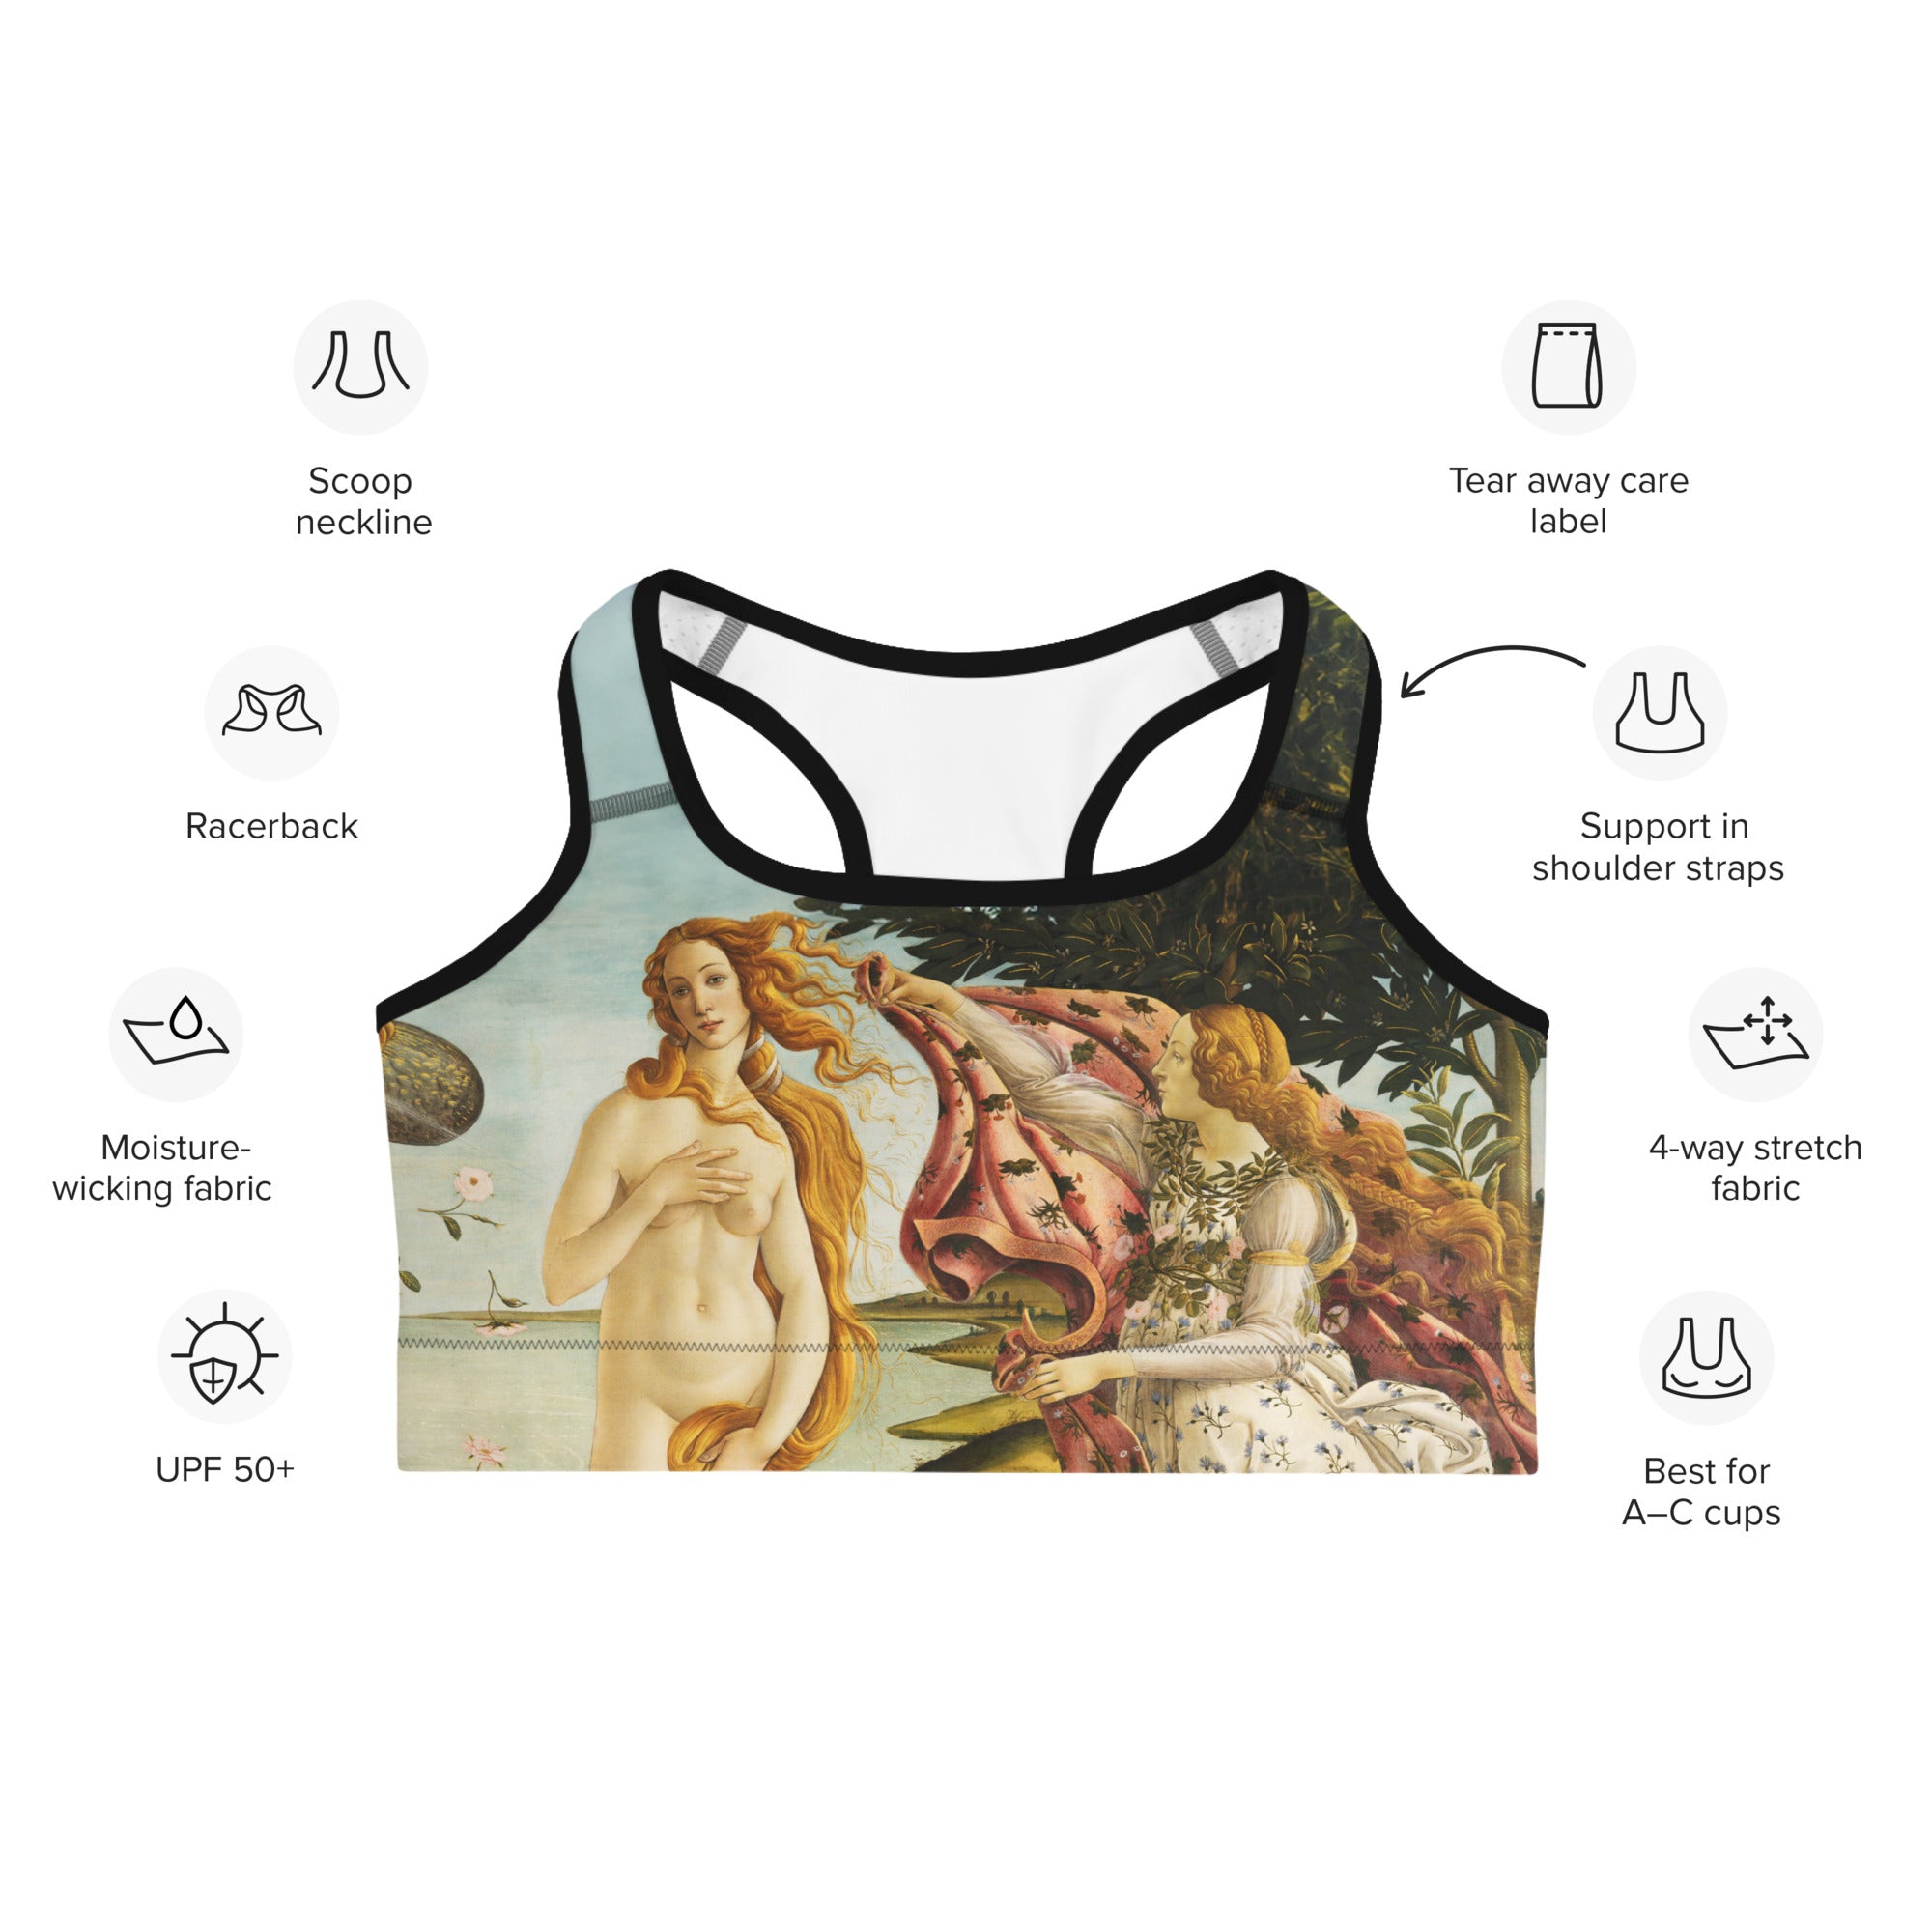 Sandro Botticelli 'The Birth of Venus' Famous Painting Sports Bra | Premium Art Sports Bra